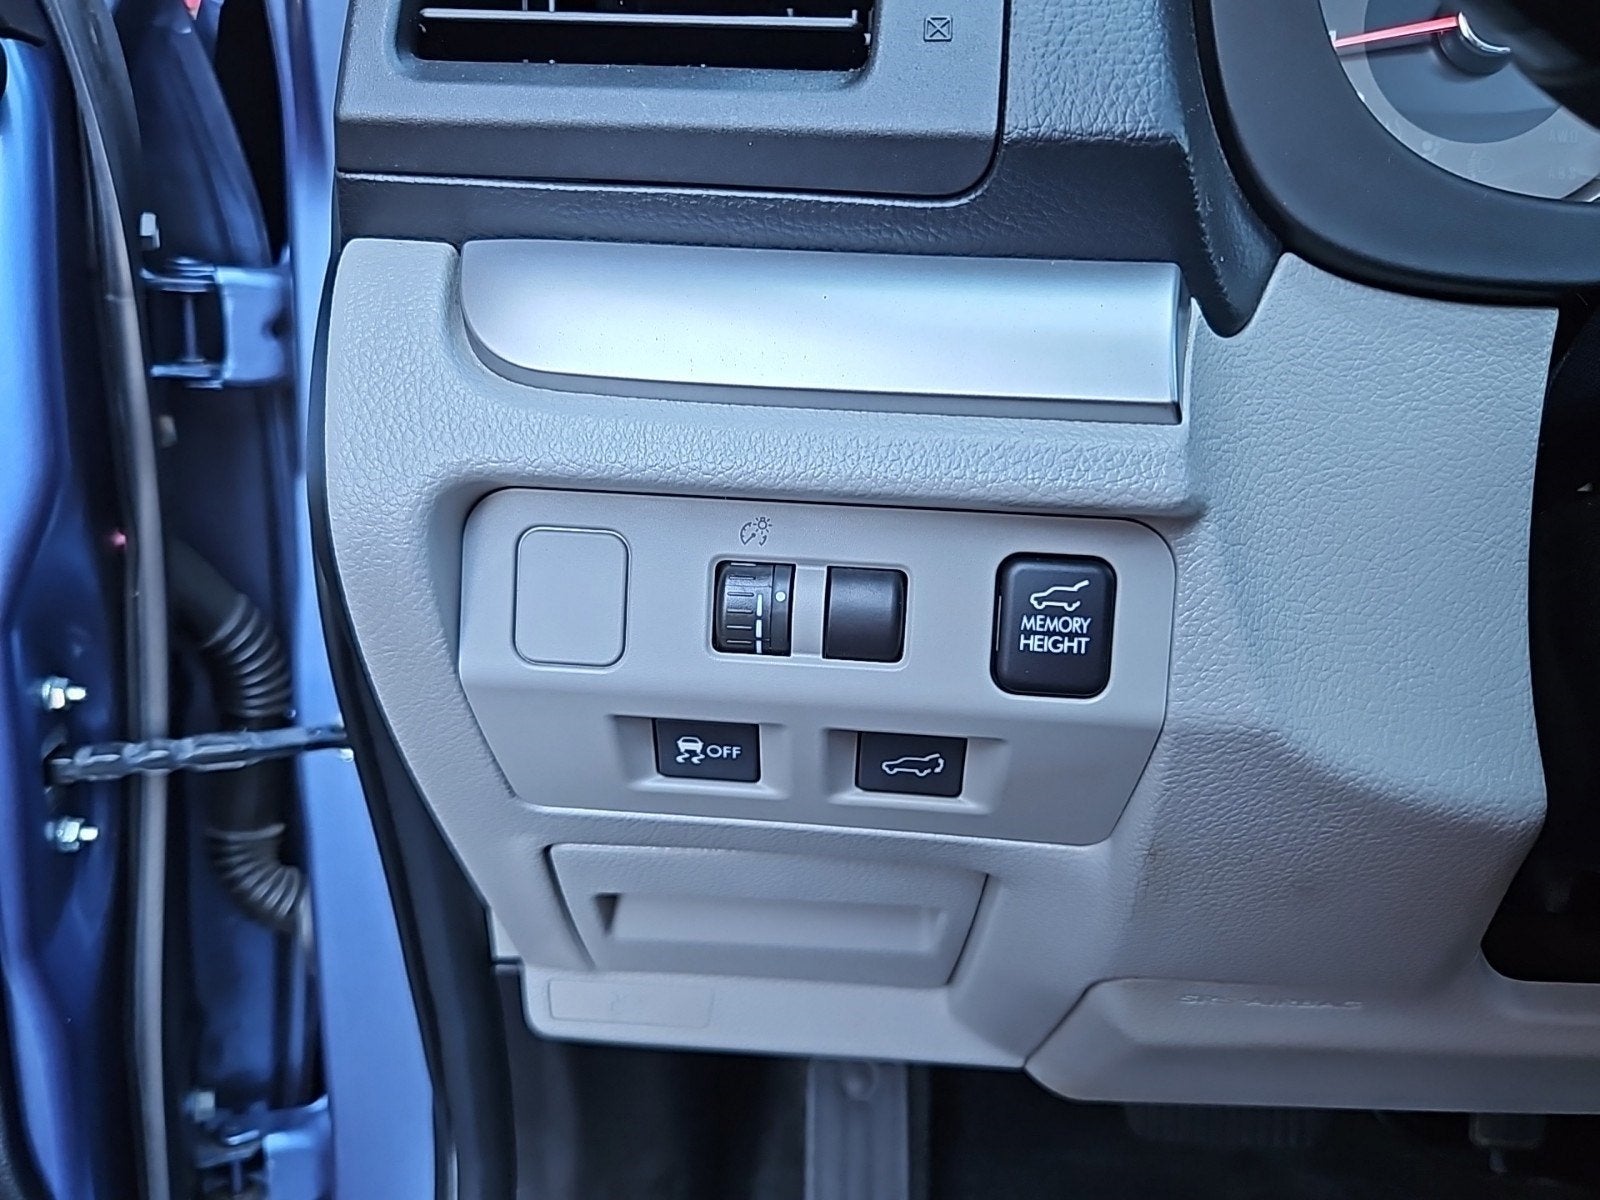 2015 Subaru Forester 2.5i Limited AWD w/ Eyesight Pkg. Nav & Sunroof